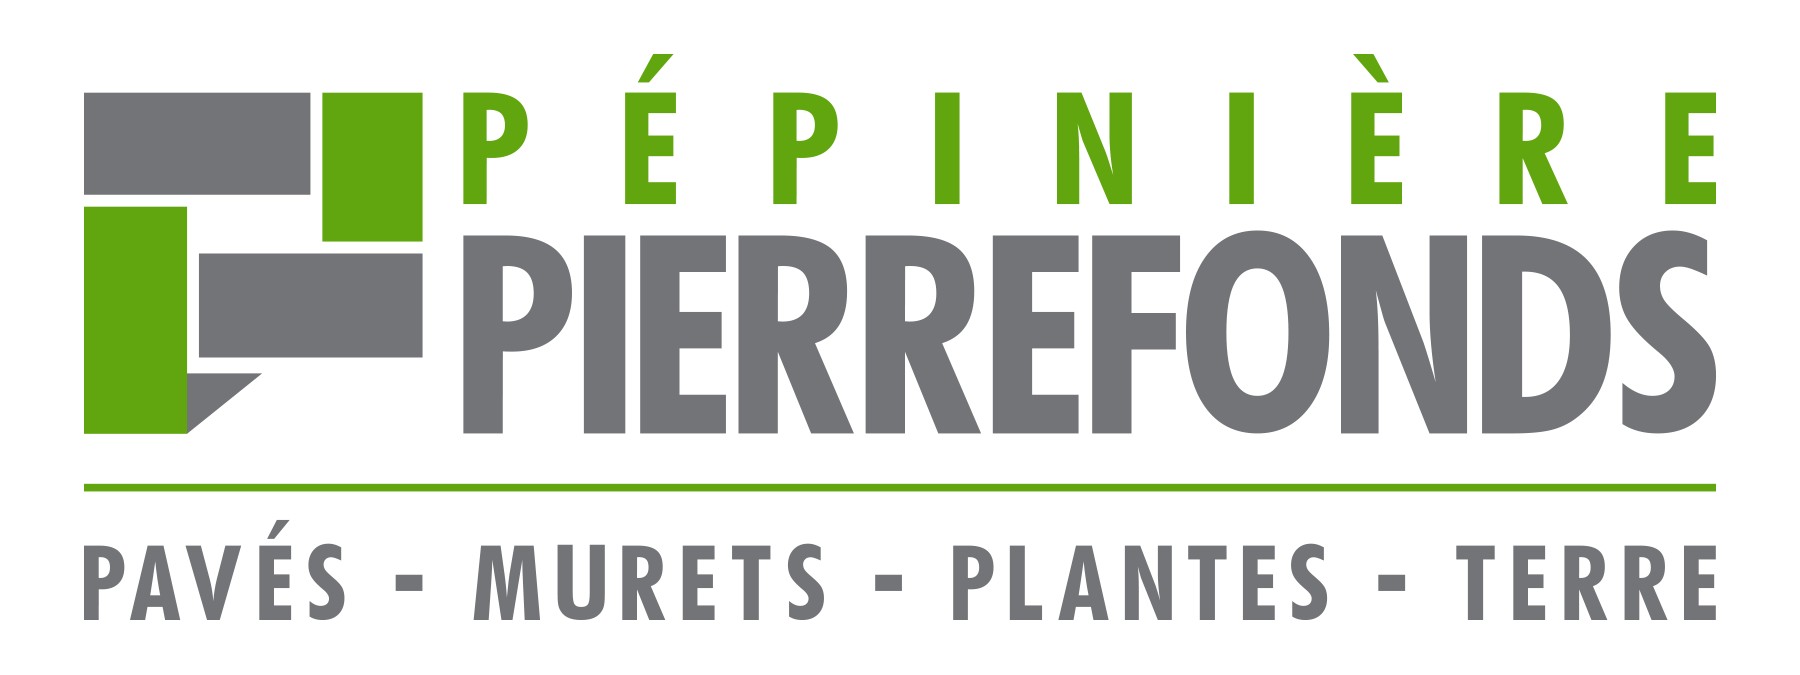 Pepiniere Pierrefonds Inc.